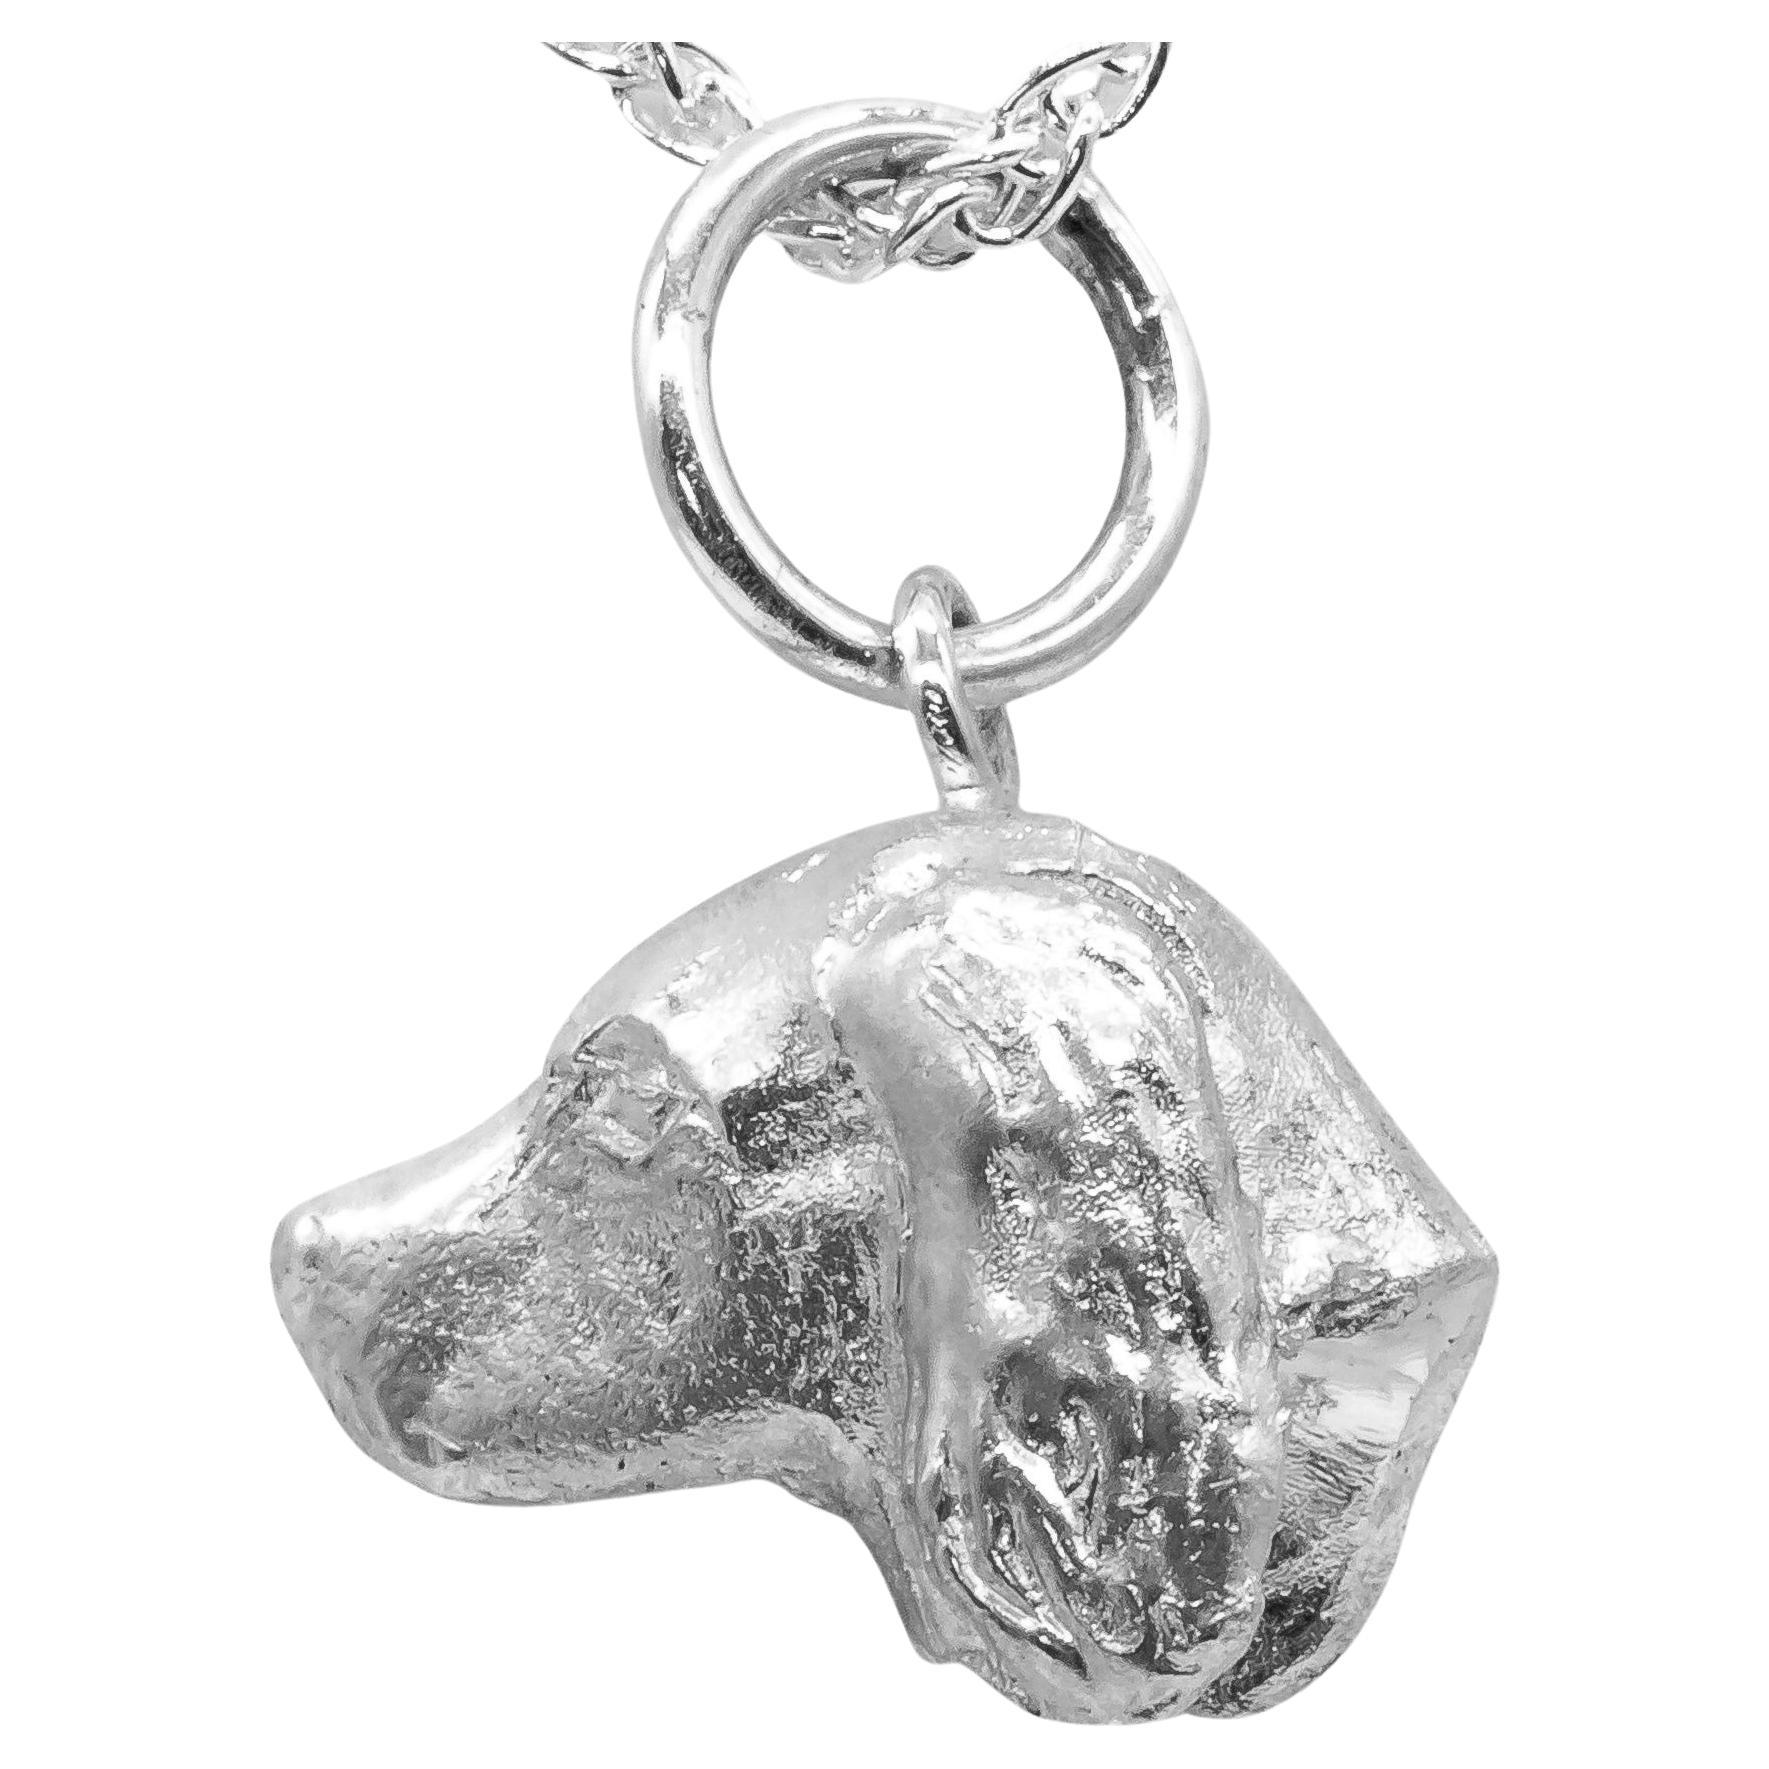 Paul Eaton 'England' Pendant Sterling Silver Miniature Spaniel Dog Head For Sale